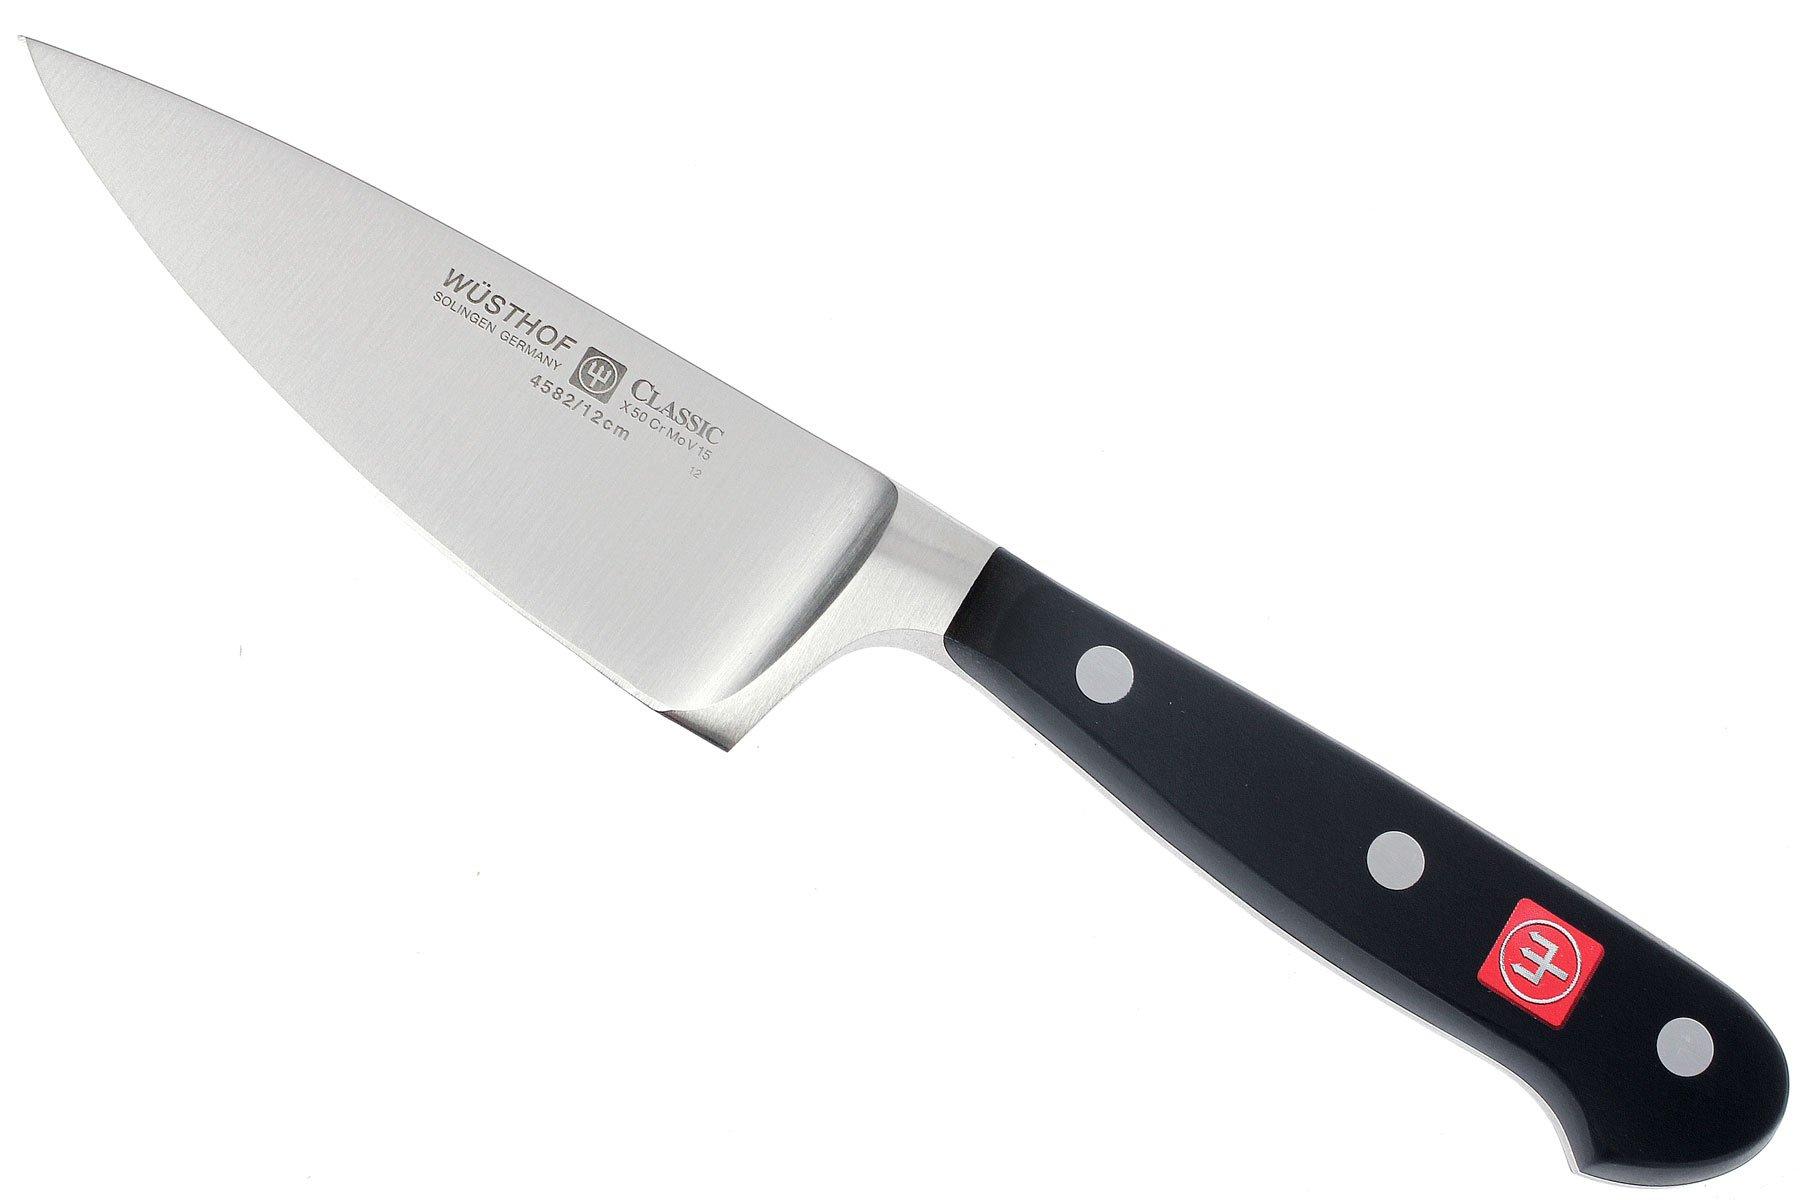 12 Inch Chef Knife